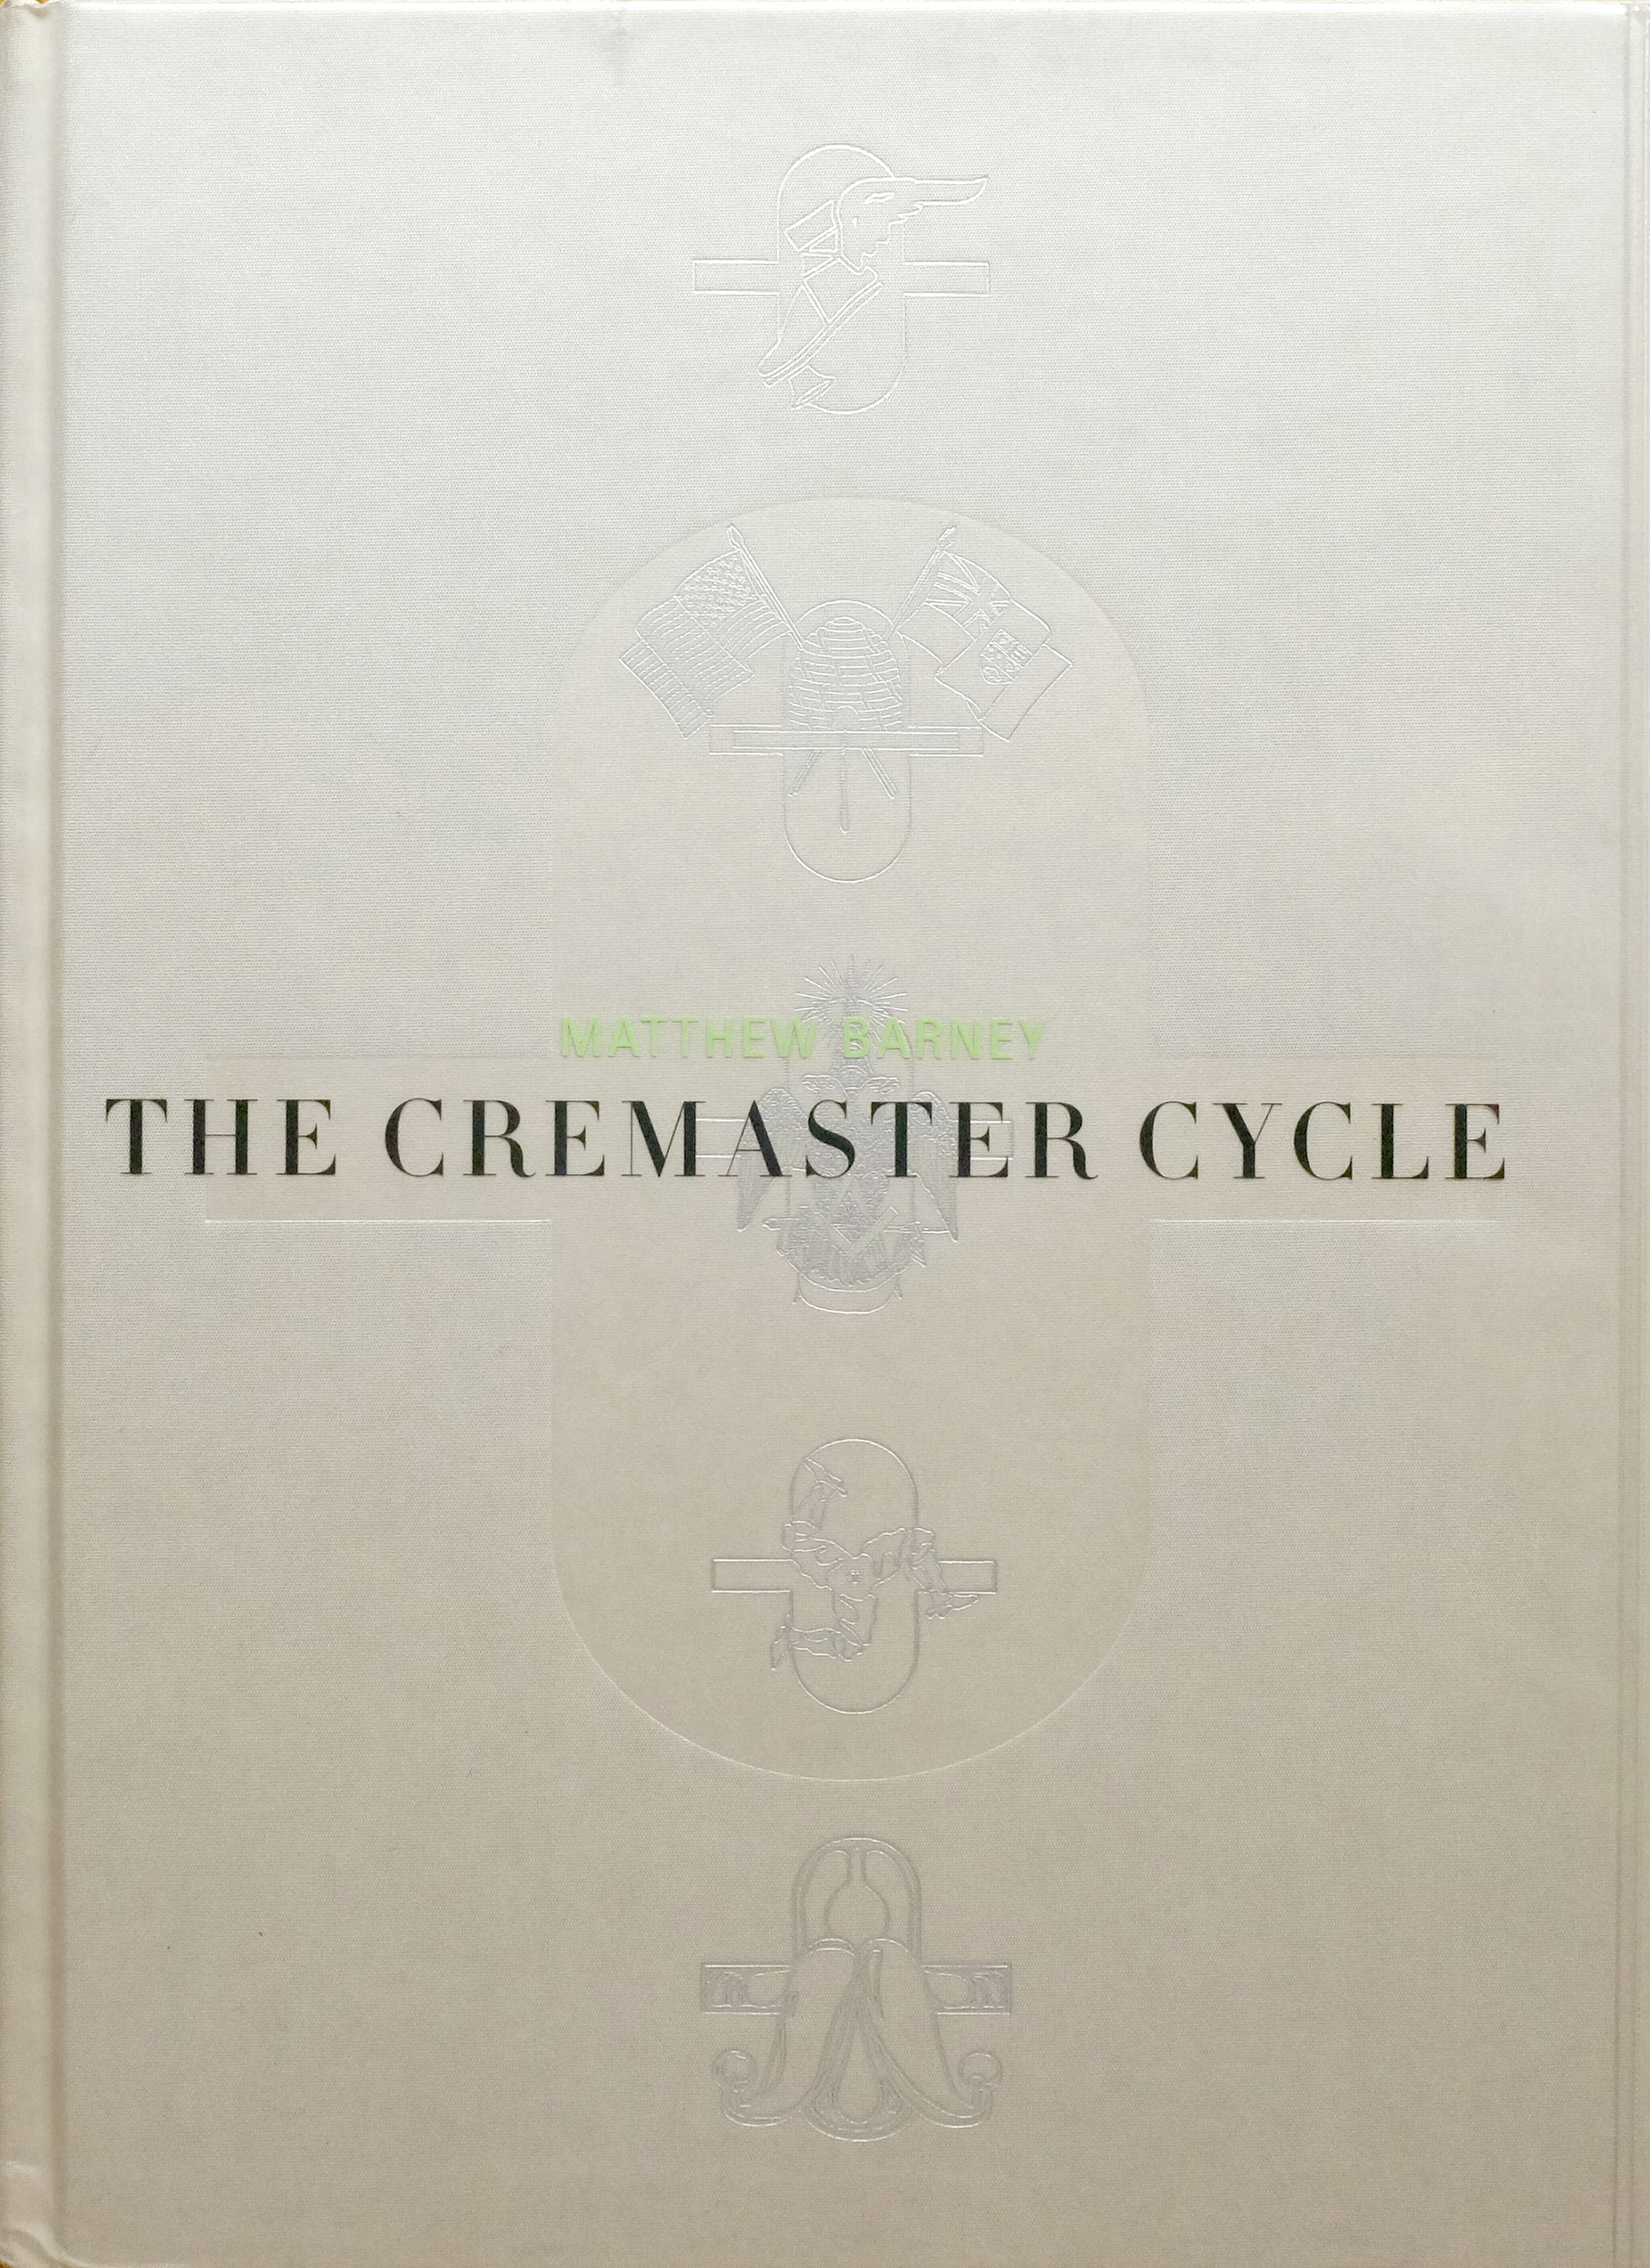 Matthew Barney: The Cremaster Cycle - Ideal Associates — Cargo Example Site